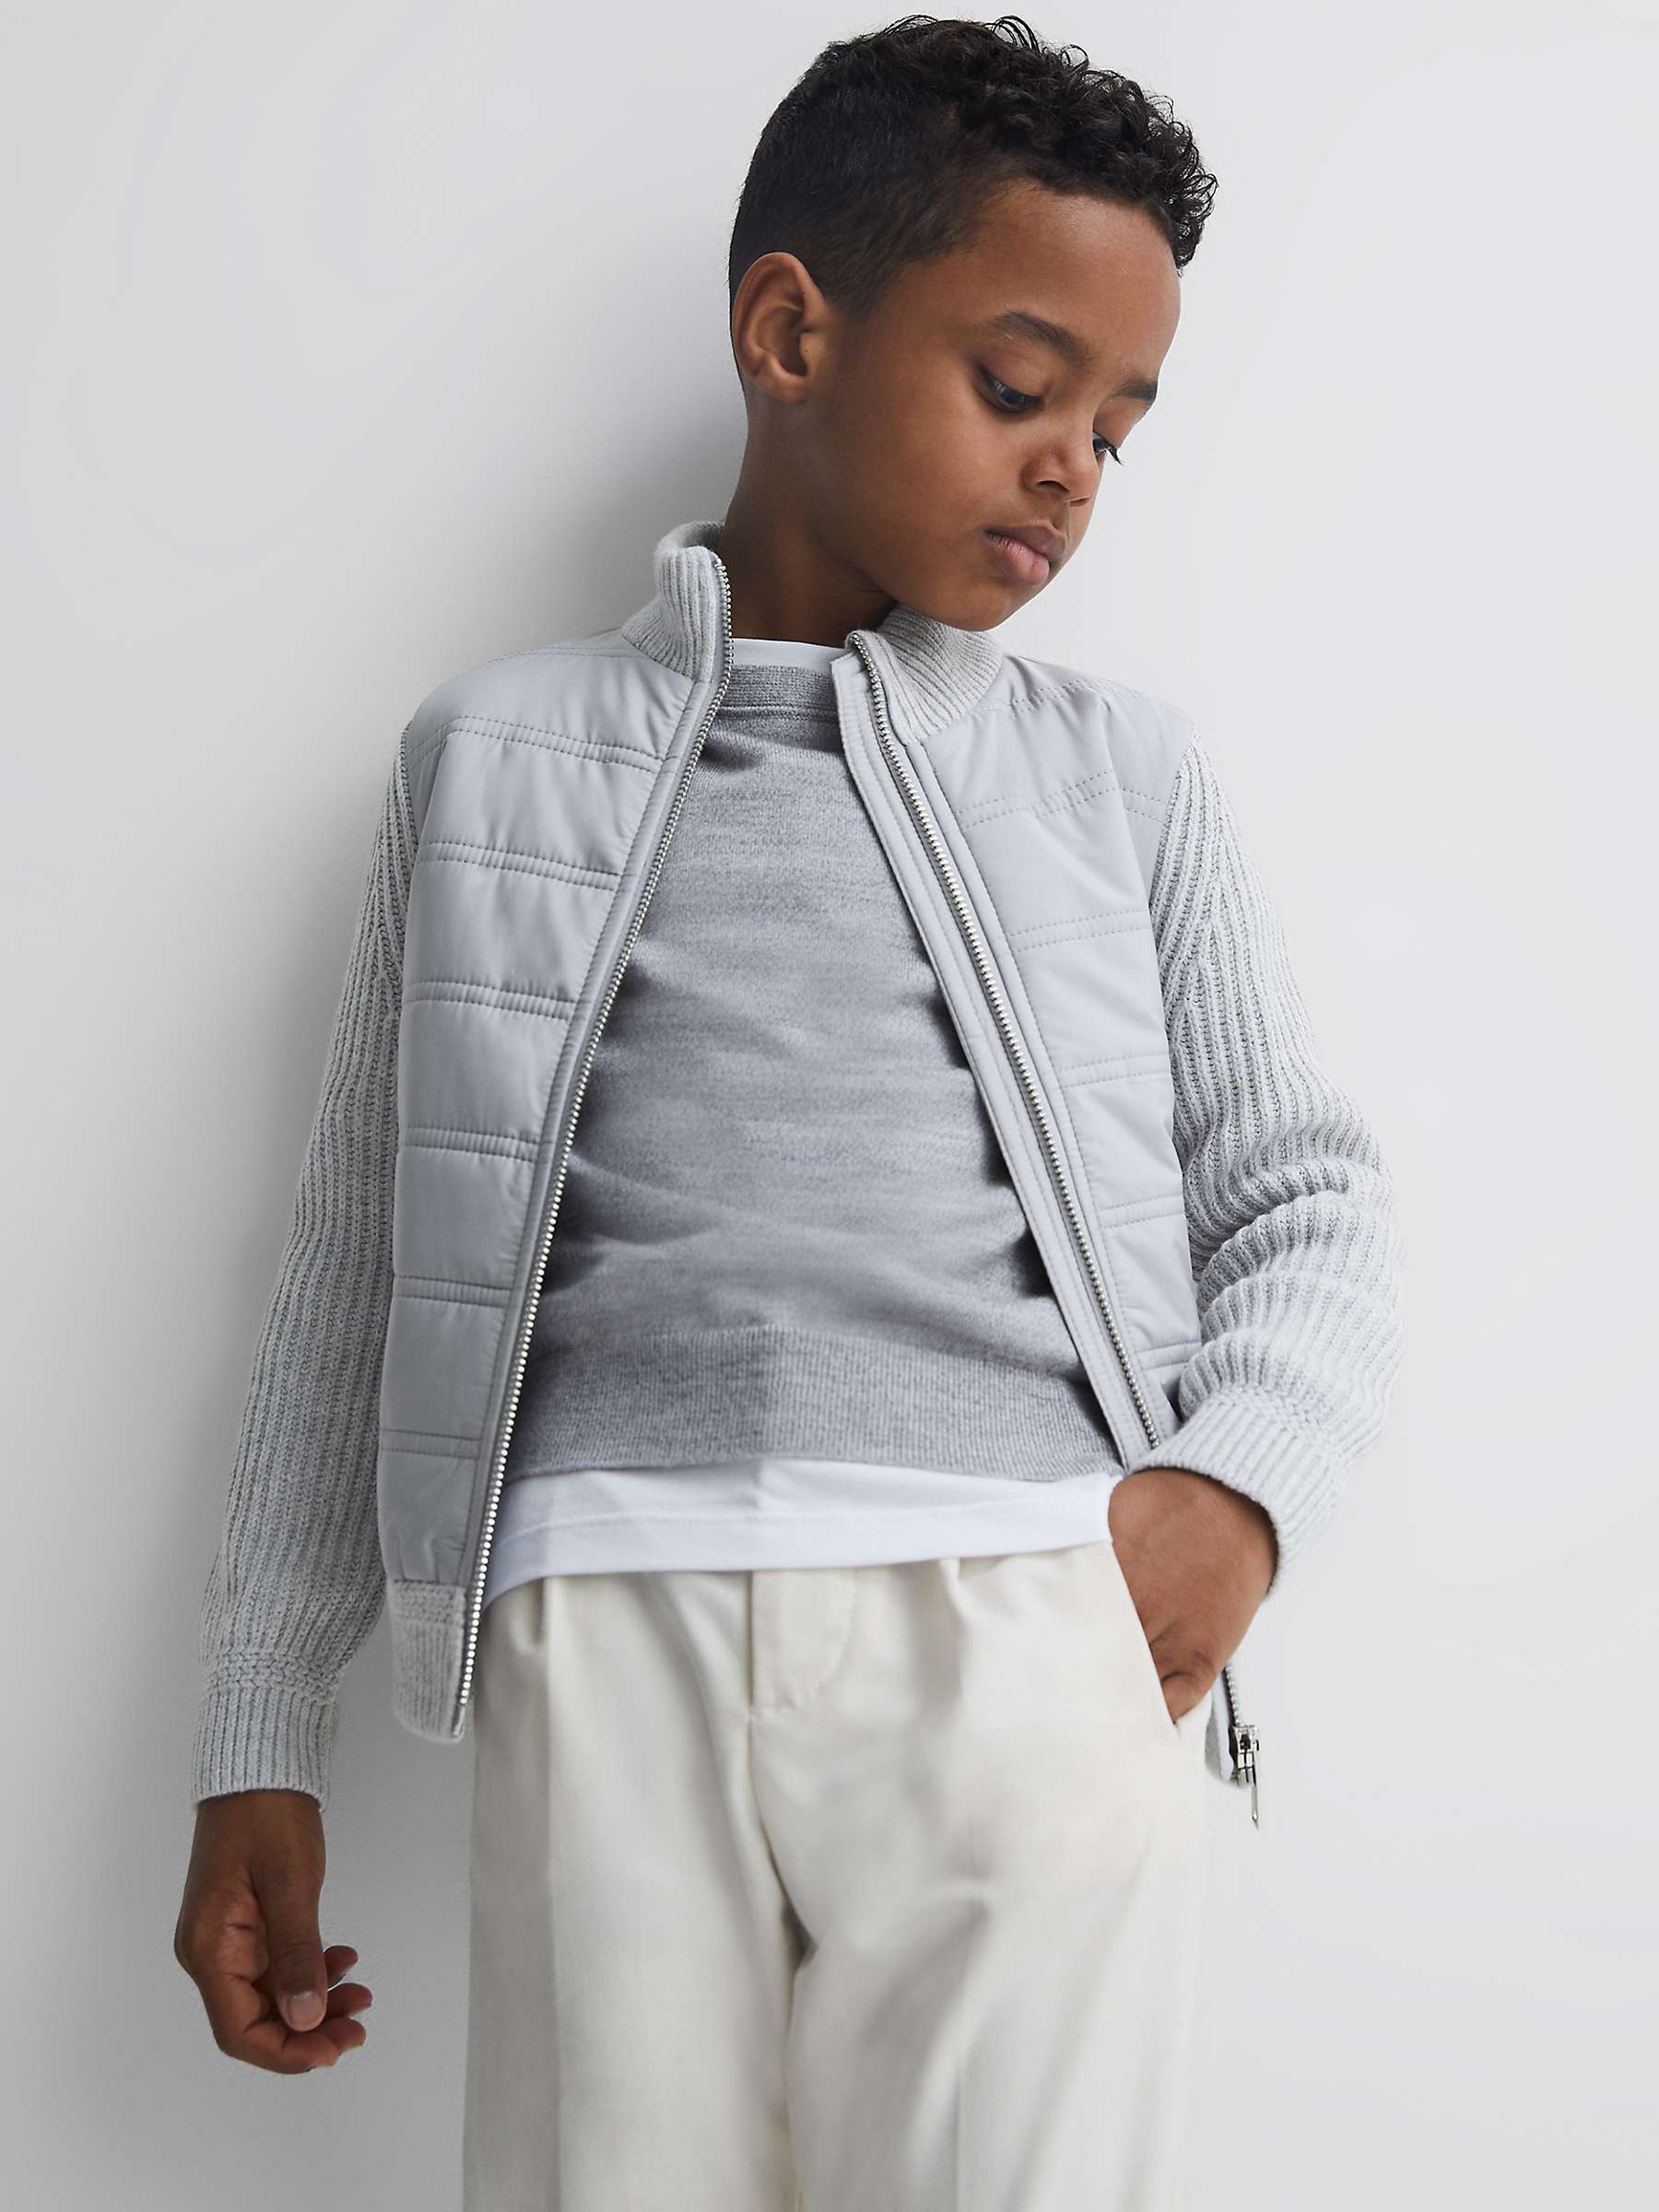 Buy Reiss Kids' Quilted Hybrid Cardigan, Soft Grey Melange Online at johnlewis.com